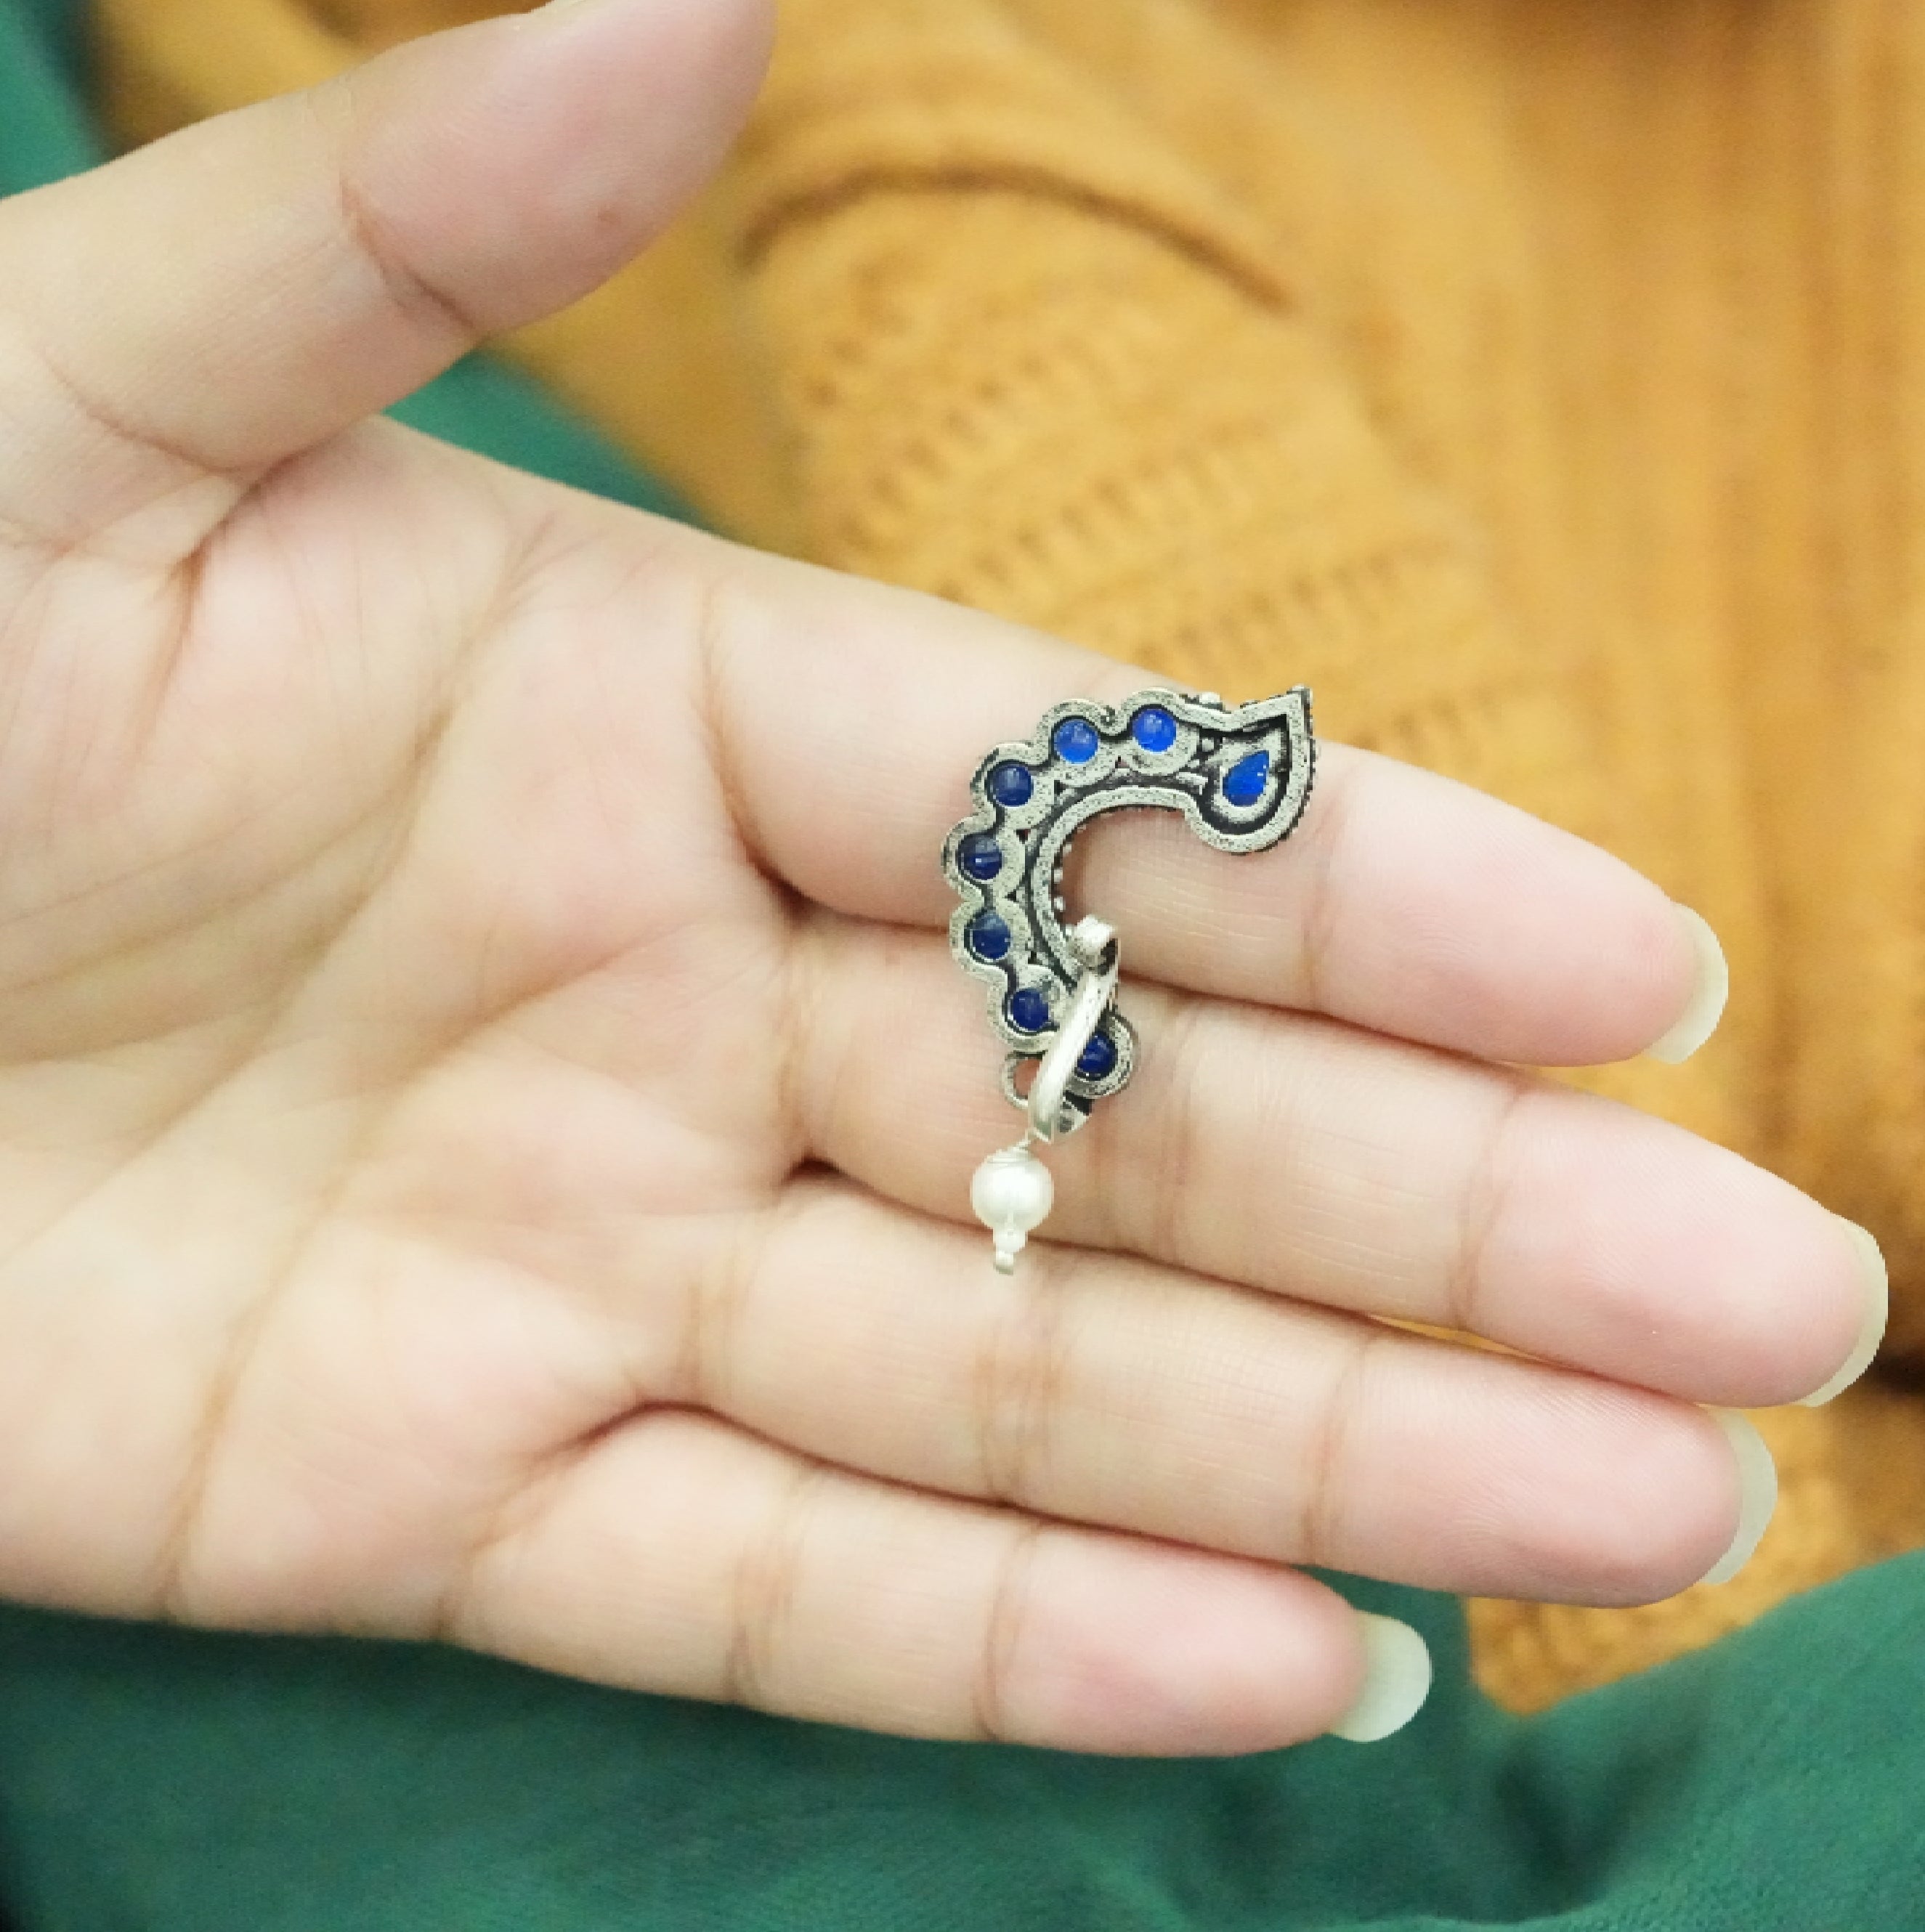 Buy Indian Nose Rings Nose studs Punjabi Jewelry hoop nose rings – Tagged 